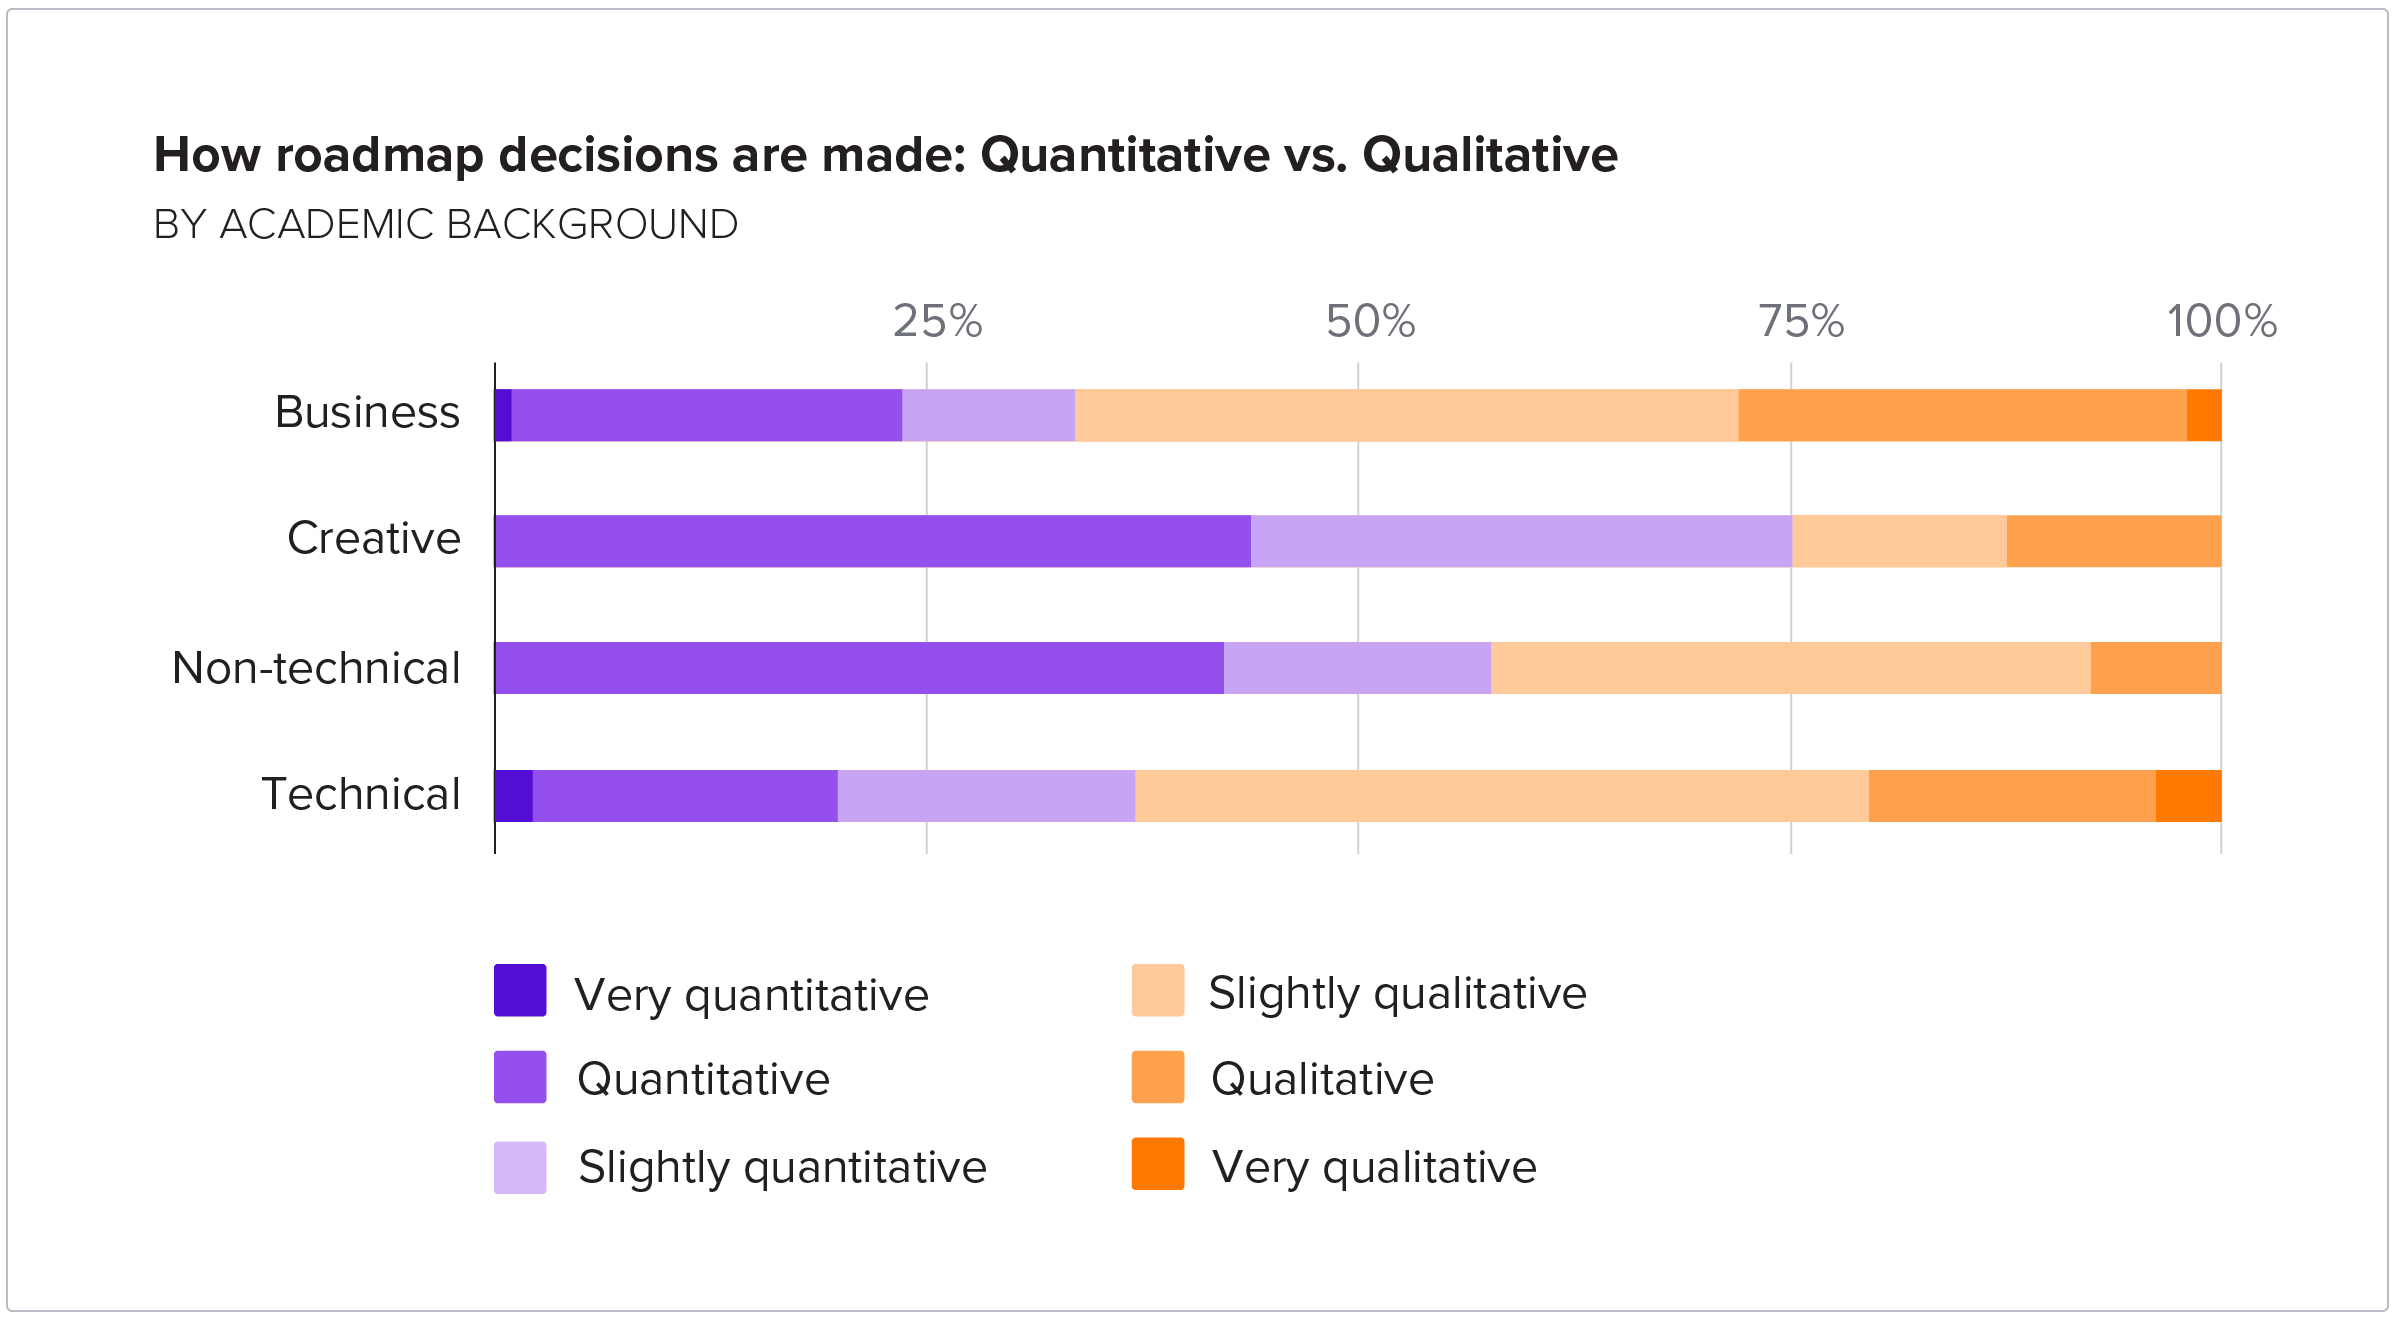 How roadmap decisions are made - Quantitative vs Qualitative - By academic background